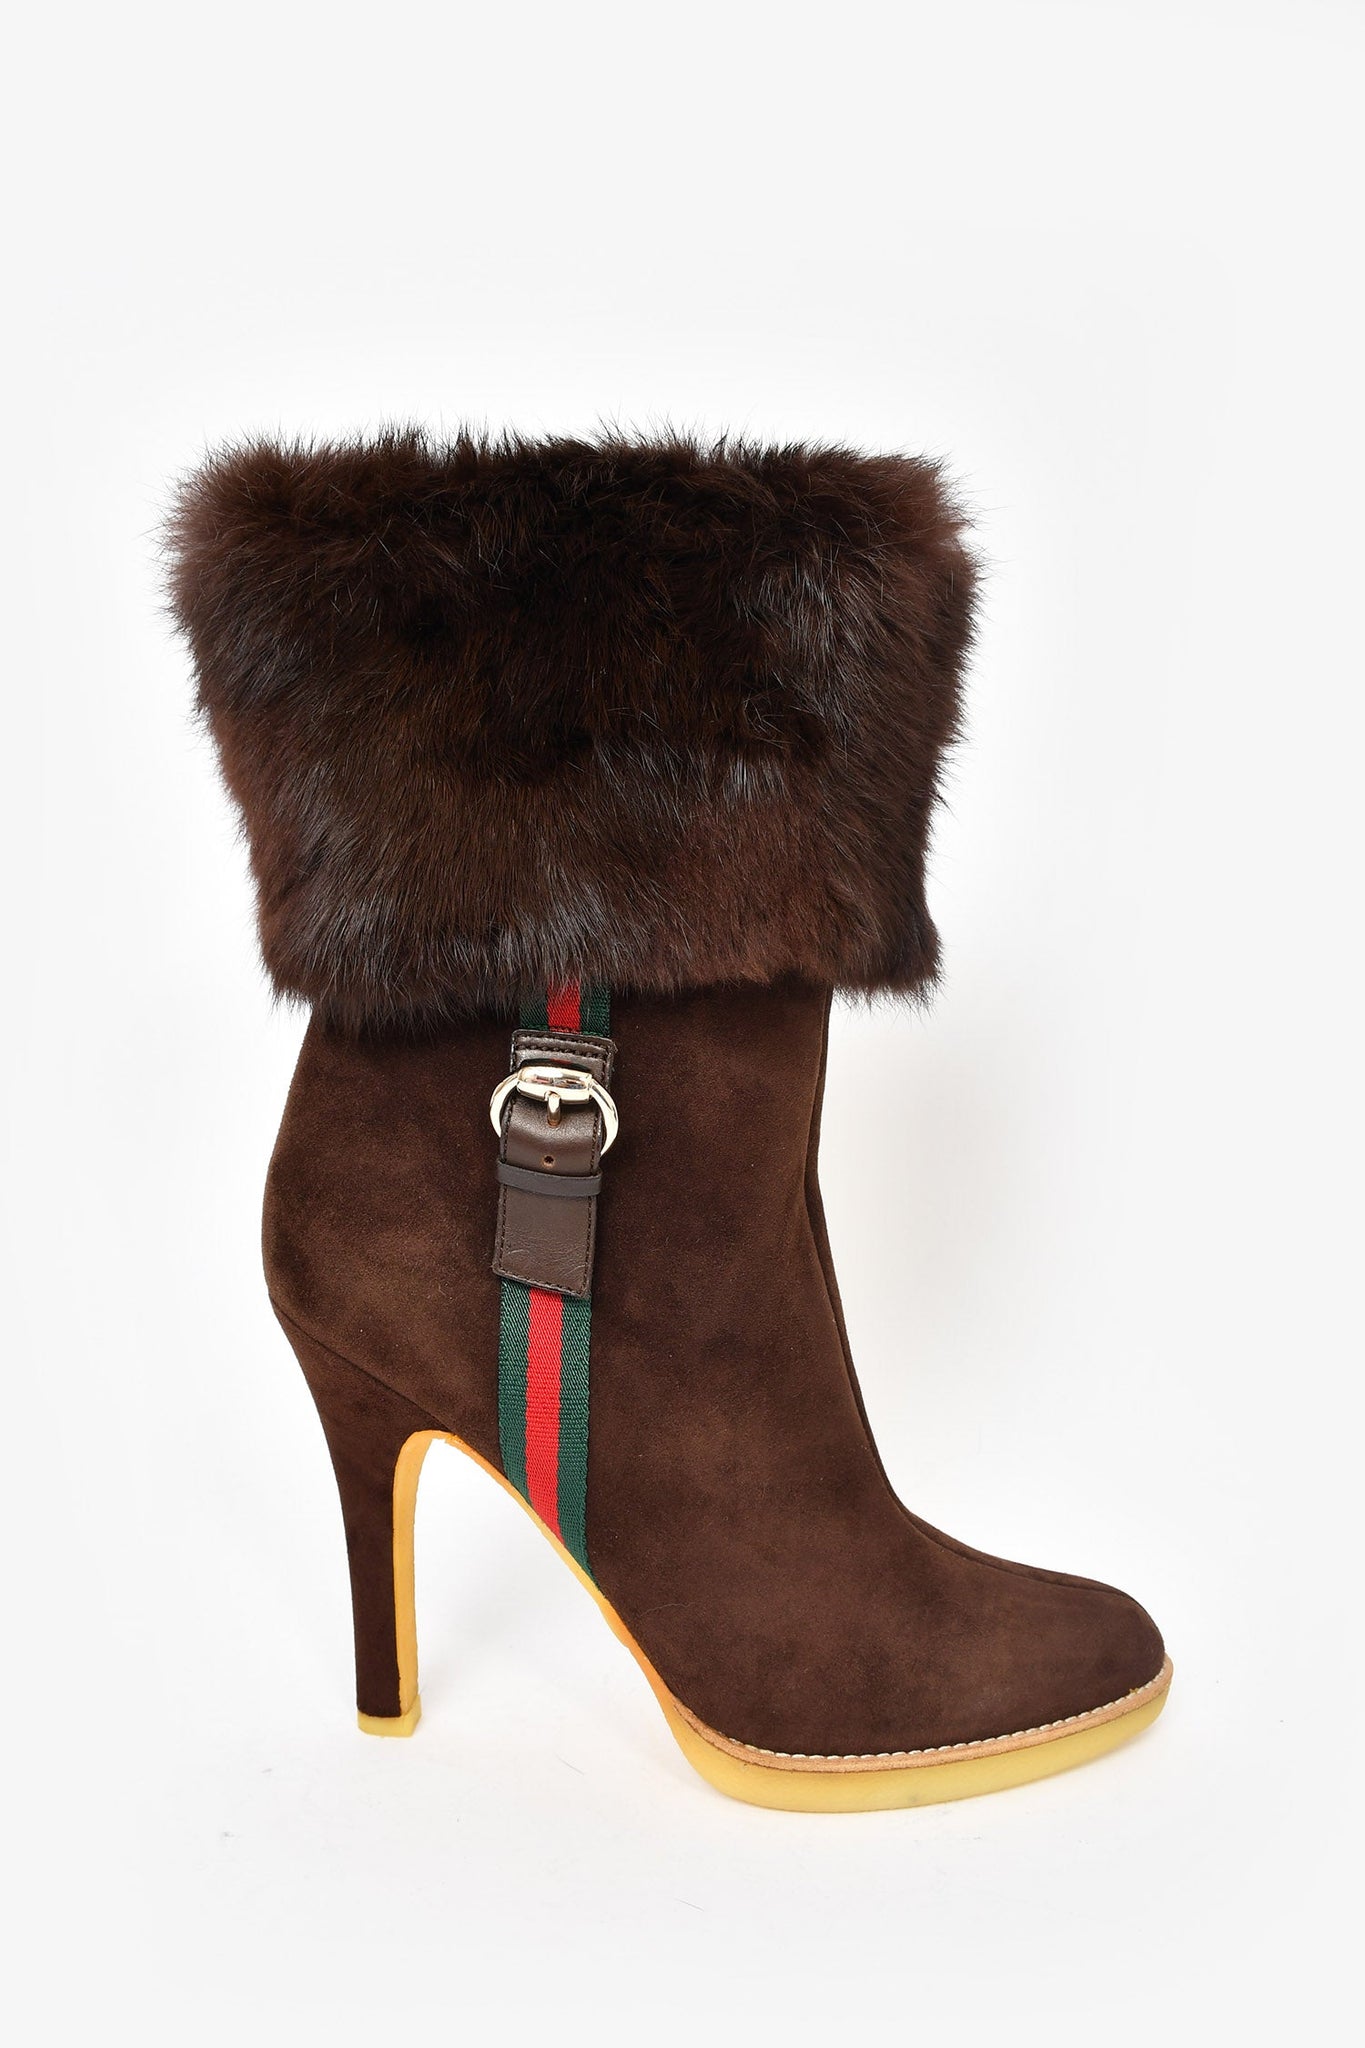 Gucci Vintage Brown Suede/Fur Heeled Web Boots sz 39